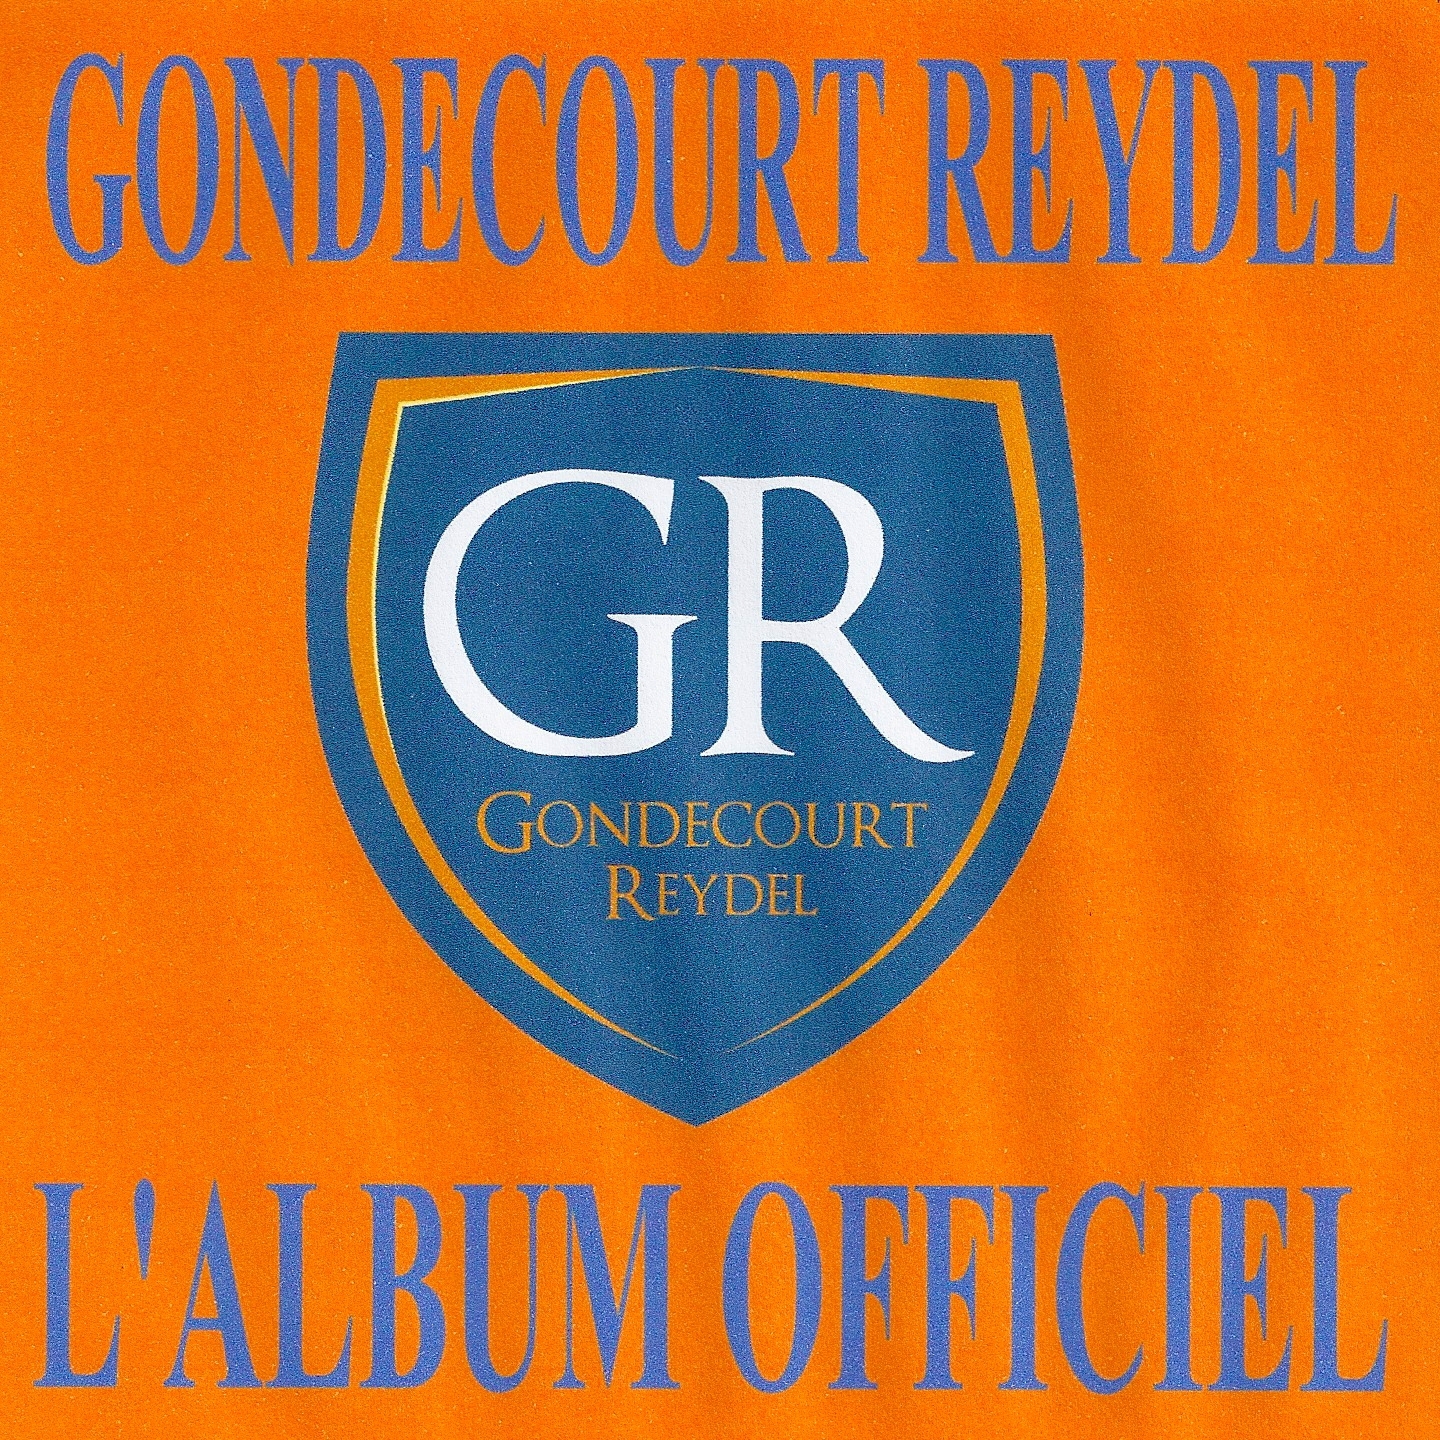 Gondecourt Reydel